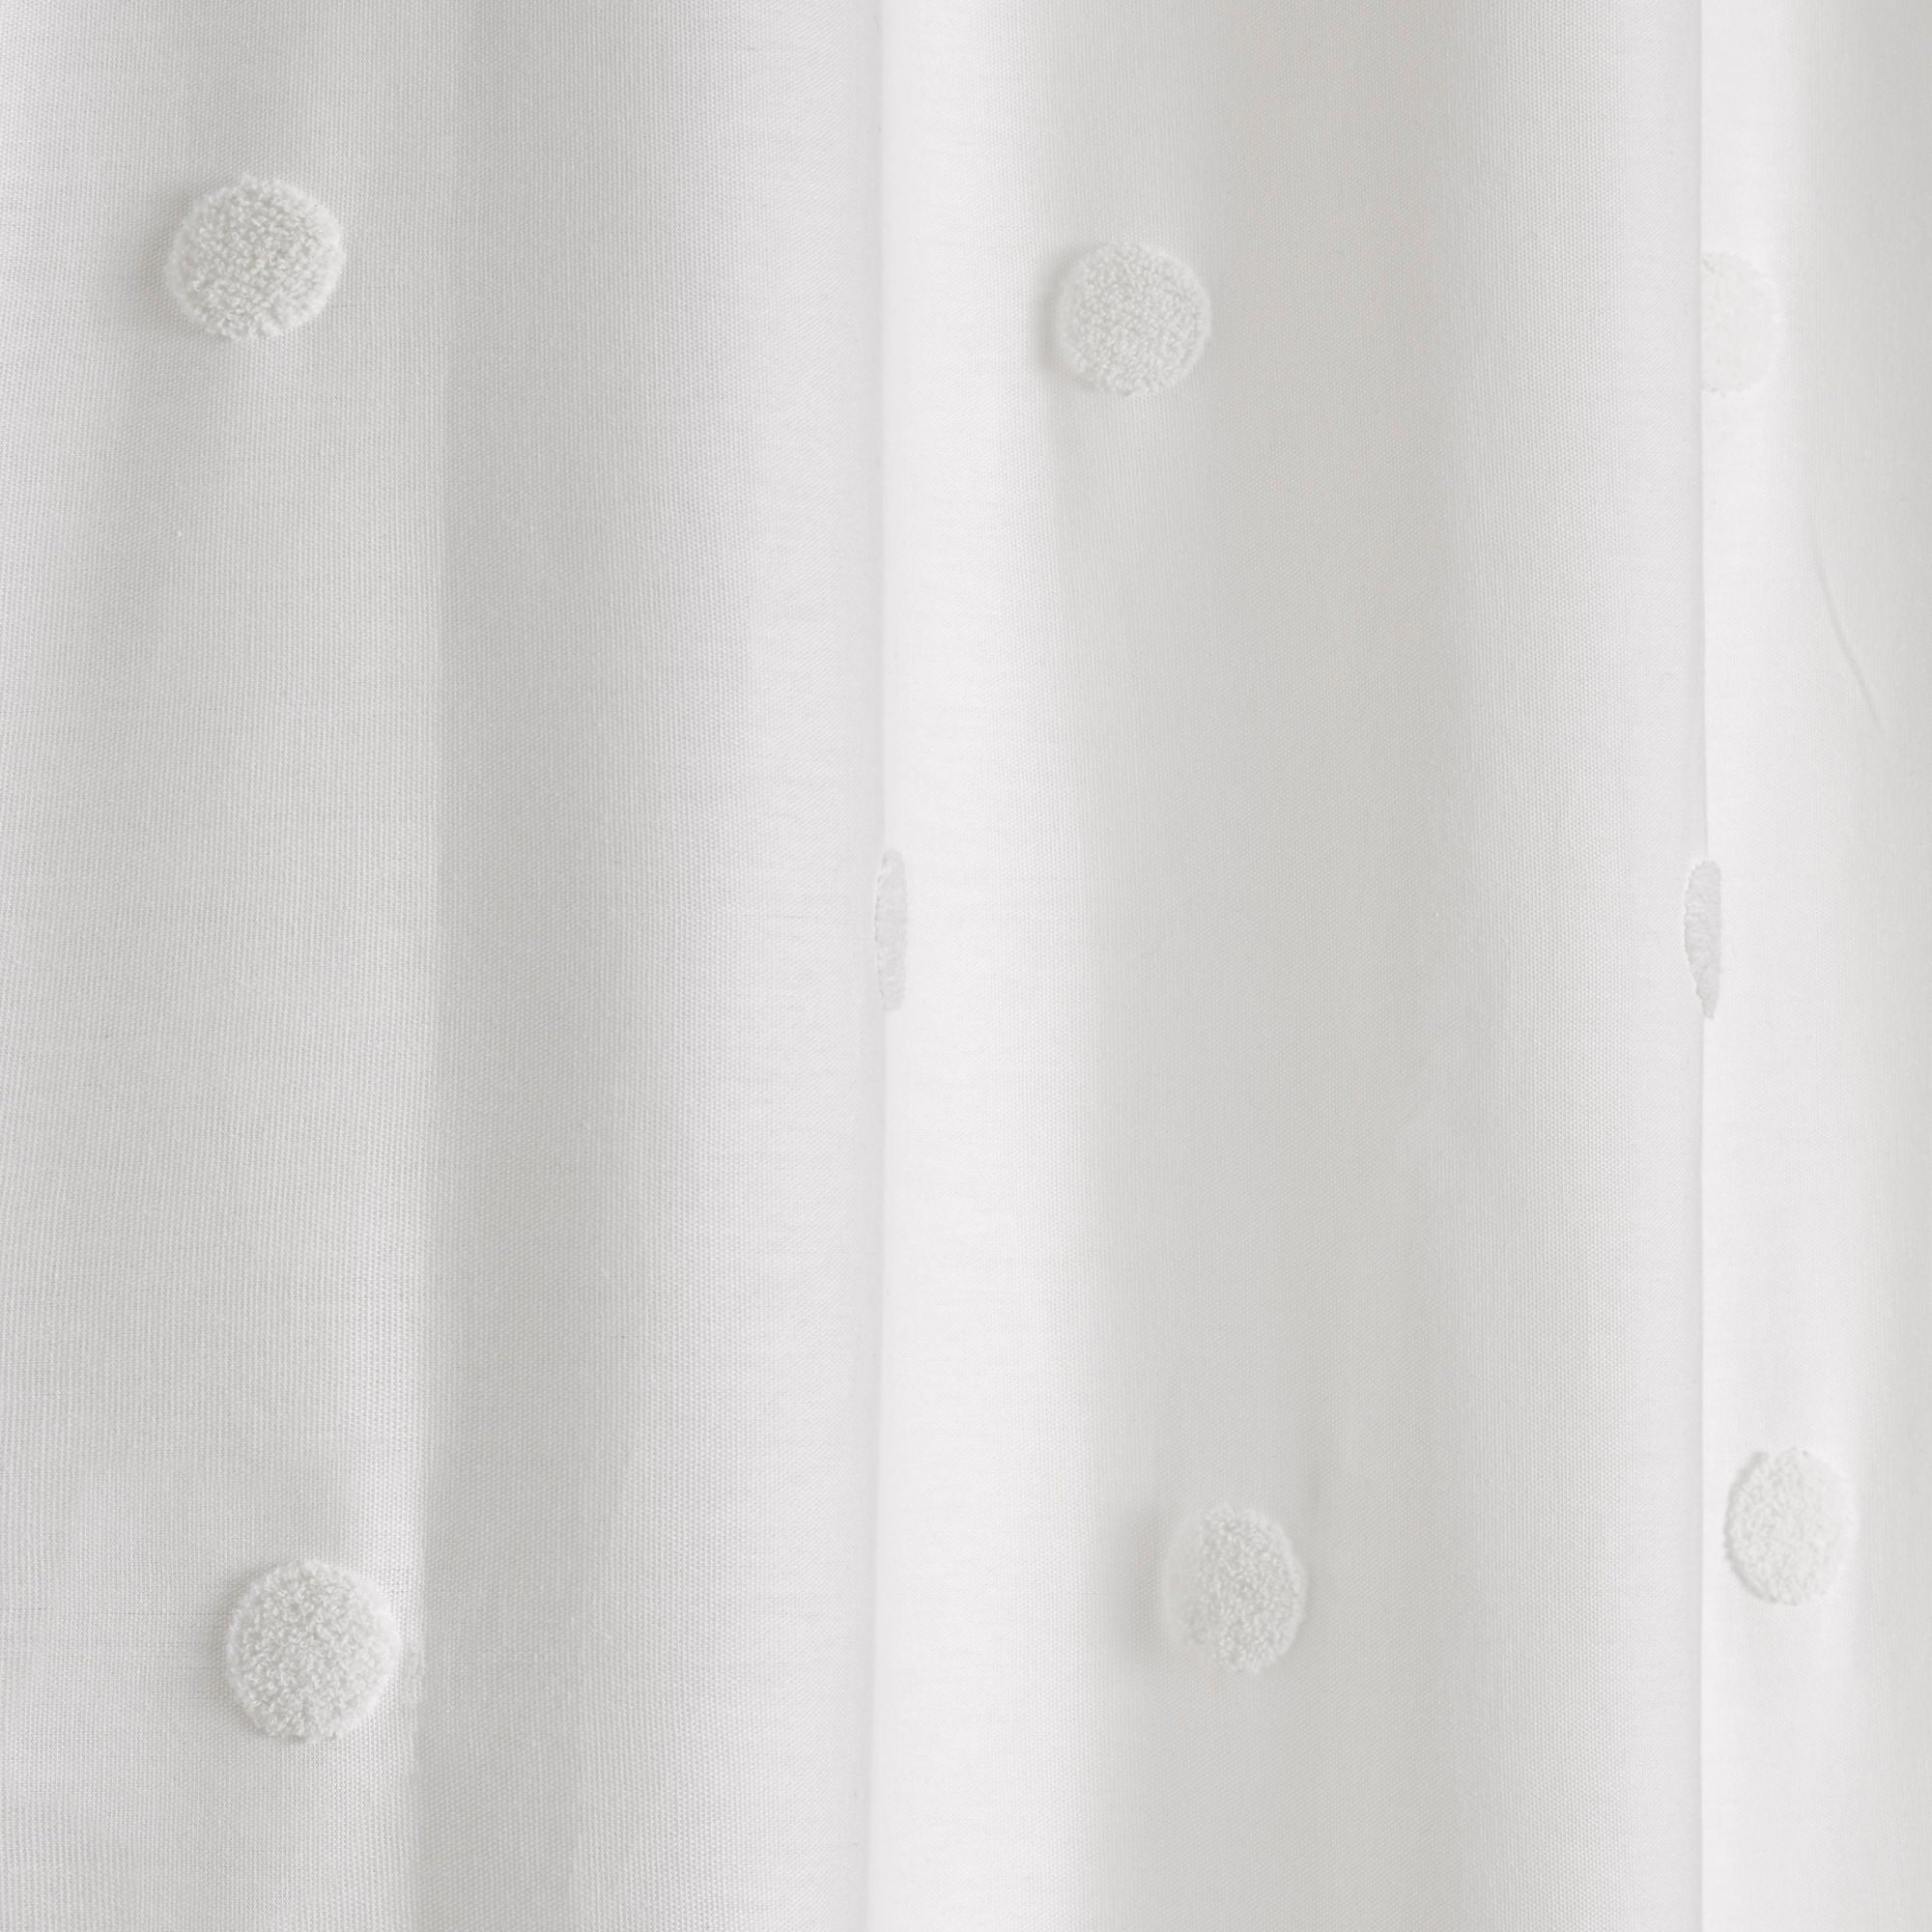 Zara Pair of Eyelet Curtains by Appletree Boutique in White - Pair of Eyelet Curtains - Appletree Boutique